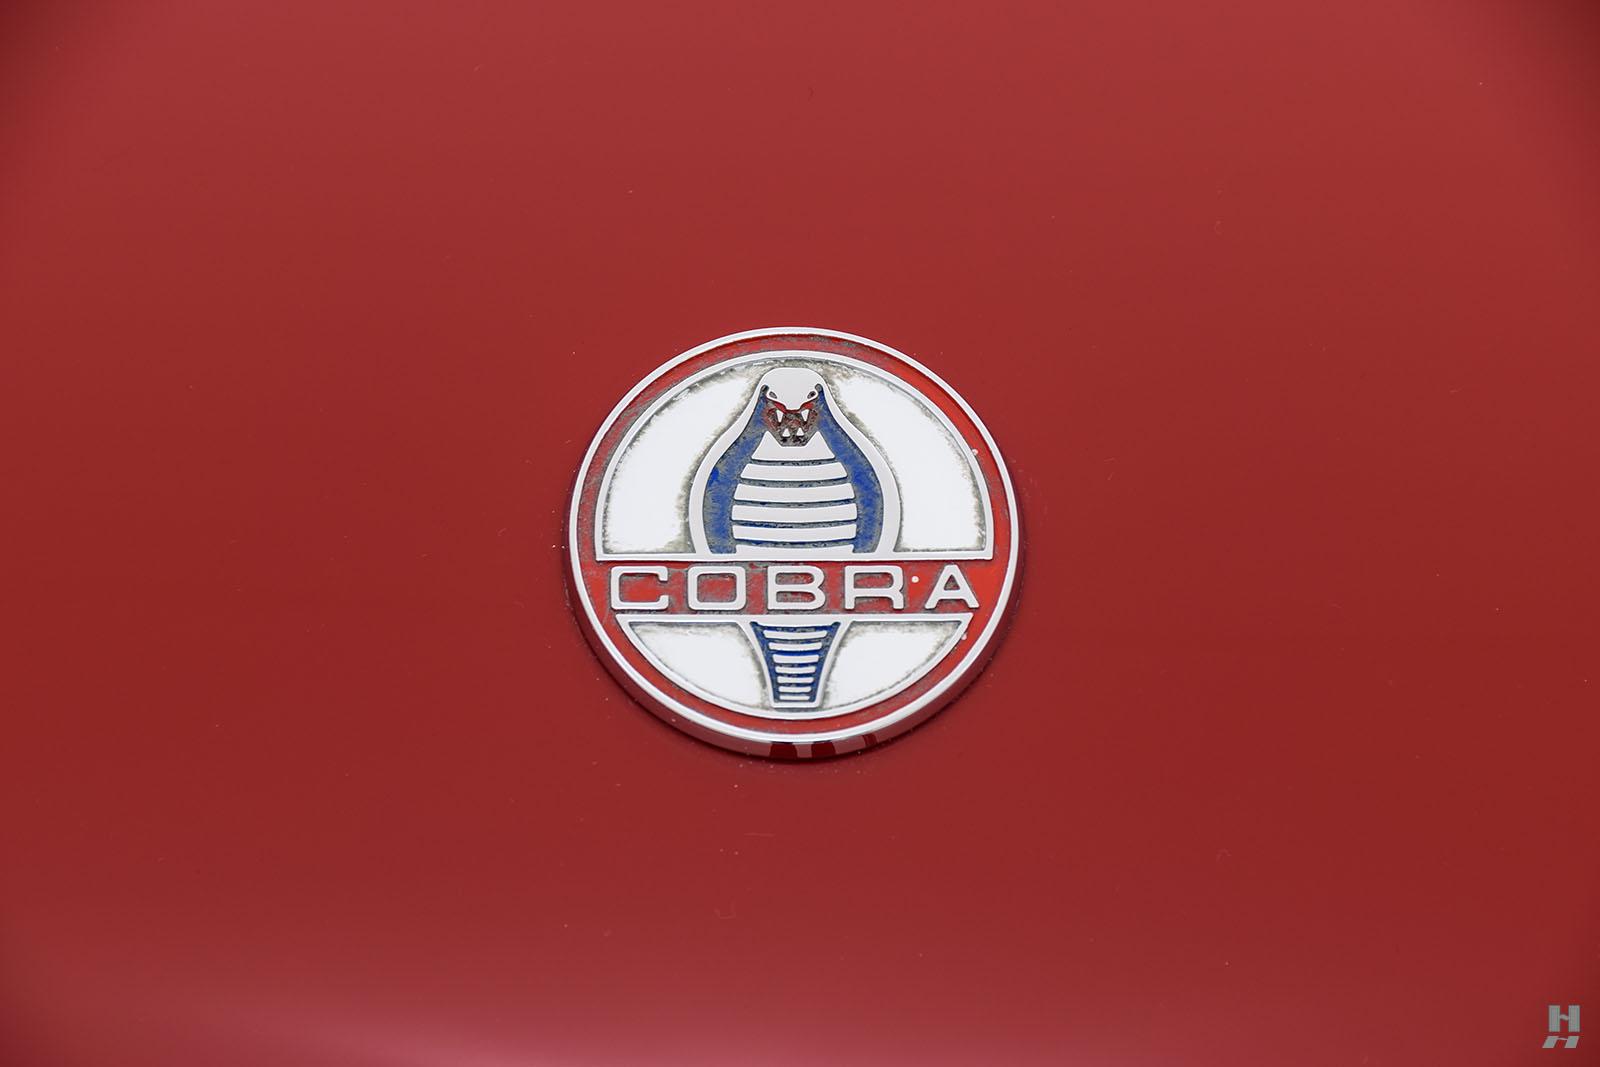 1965 shelby cobra 427 (csx3101 - csx3200)